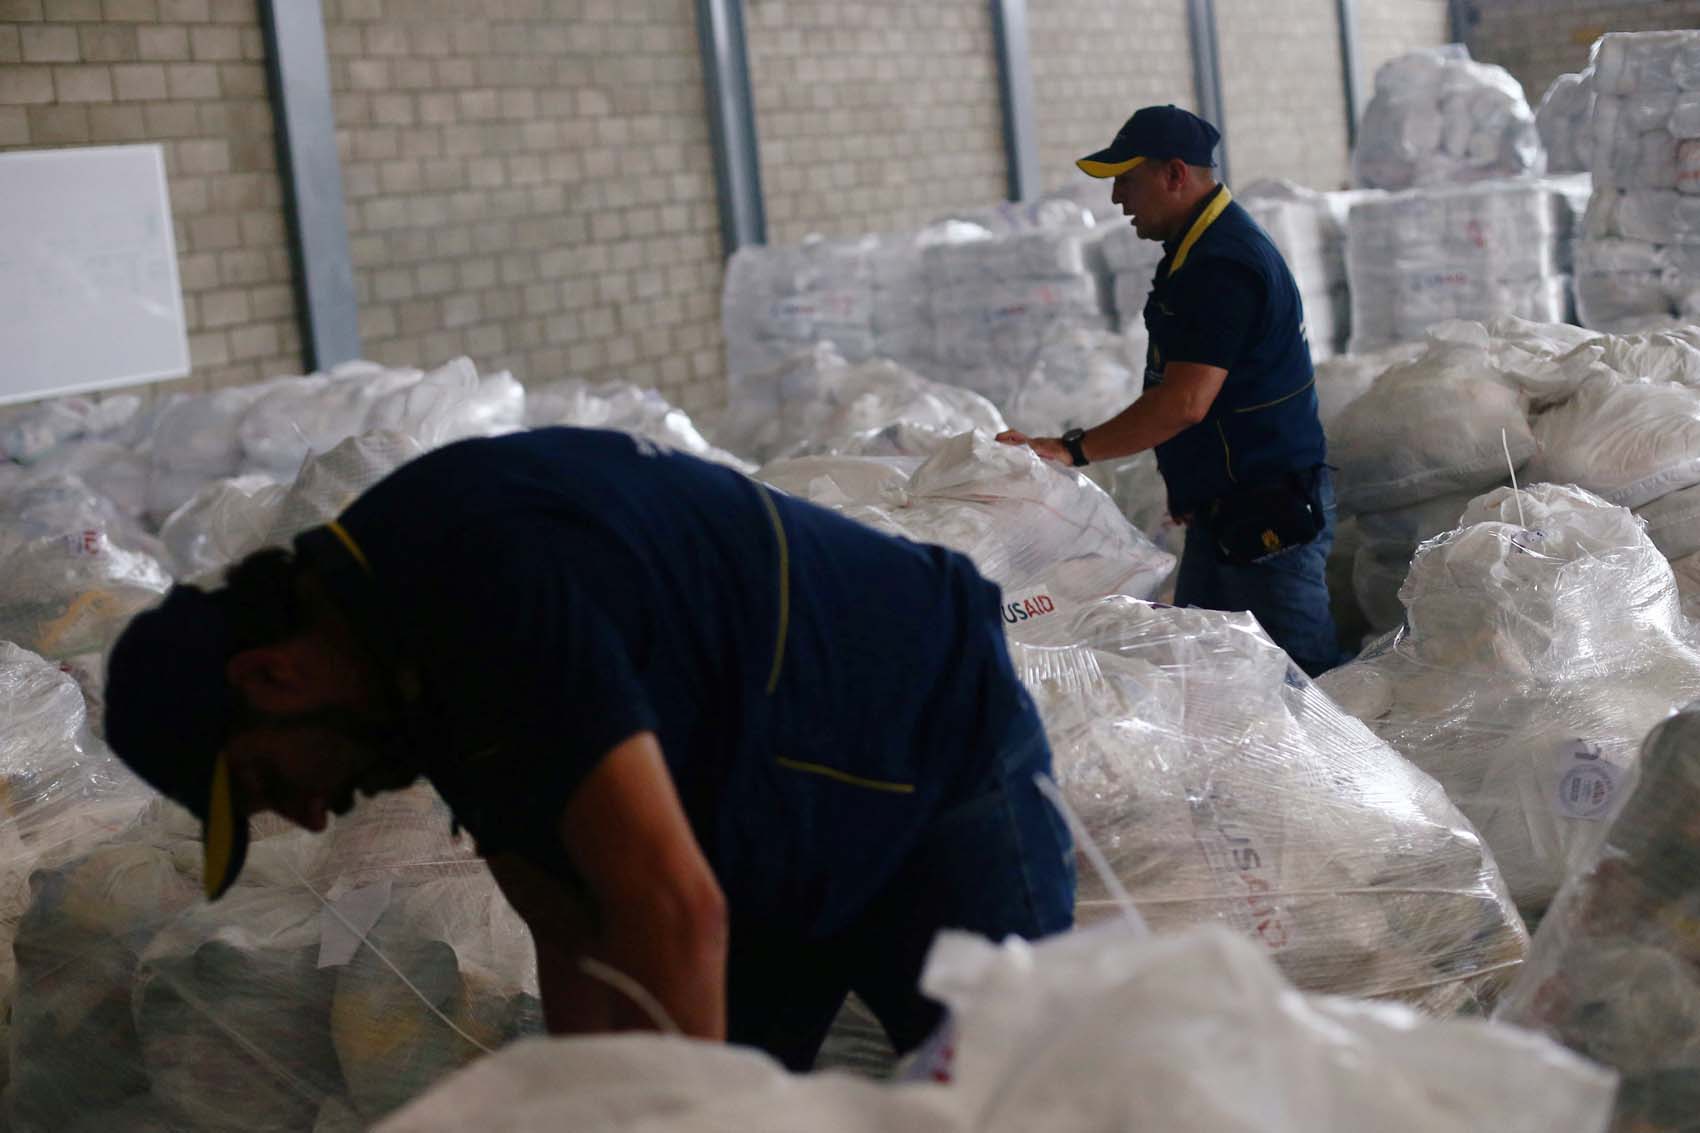 Brasil donará 150 toneladas de medicamentos e insumos en ayuda humanitaria para Venezuela